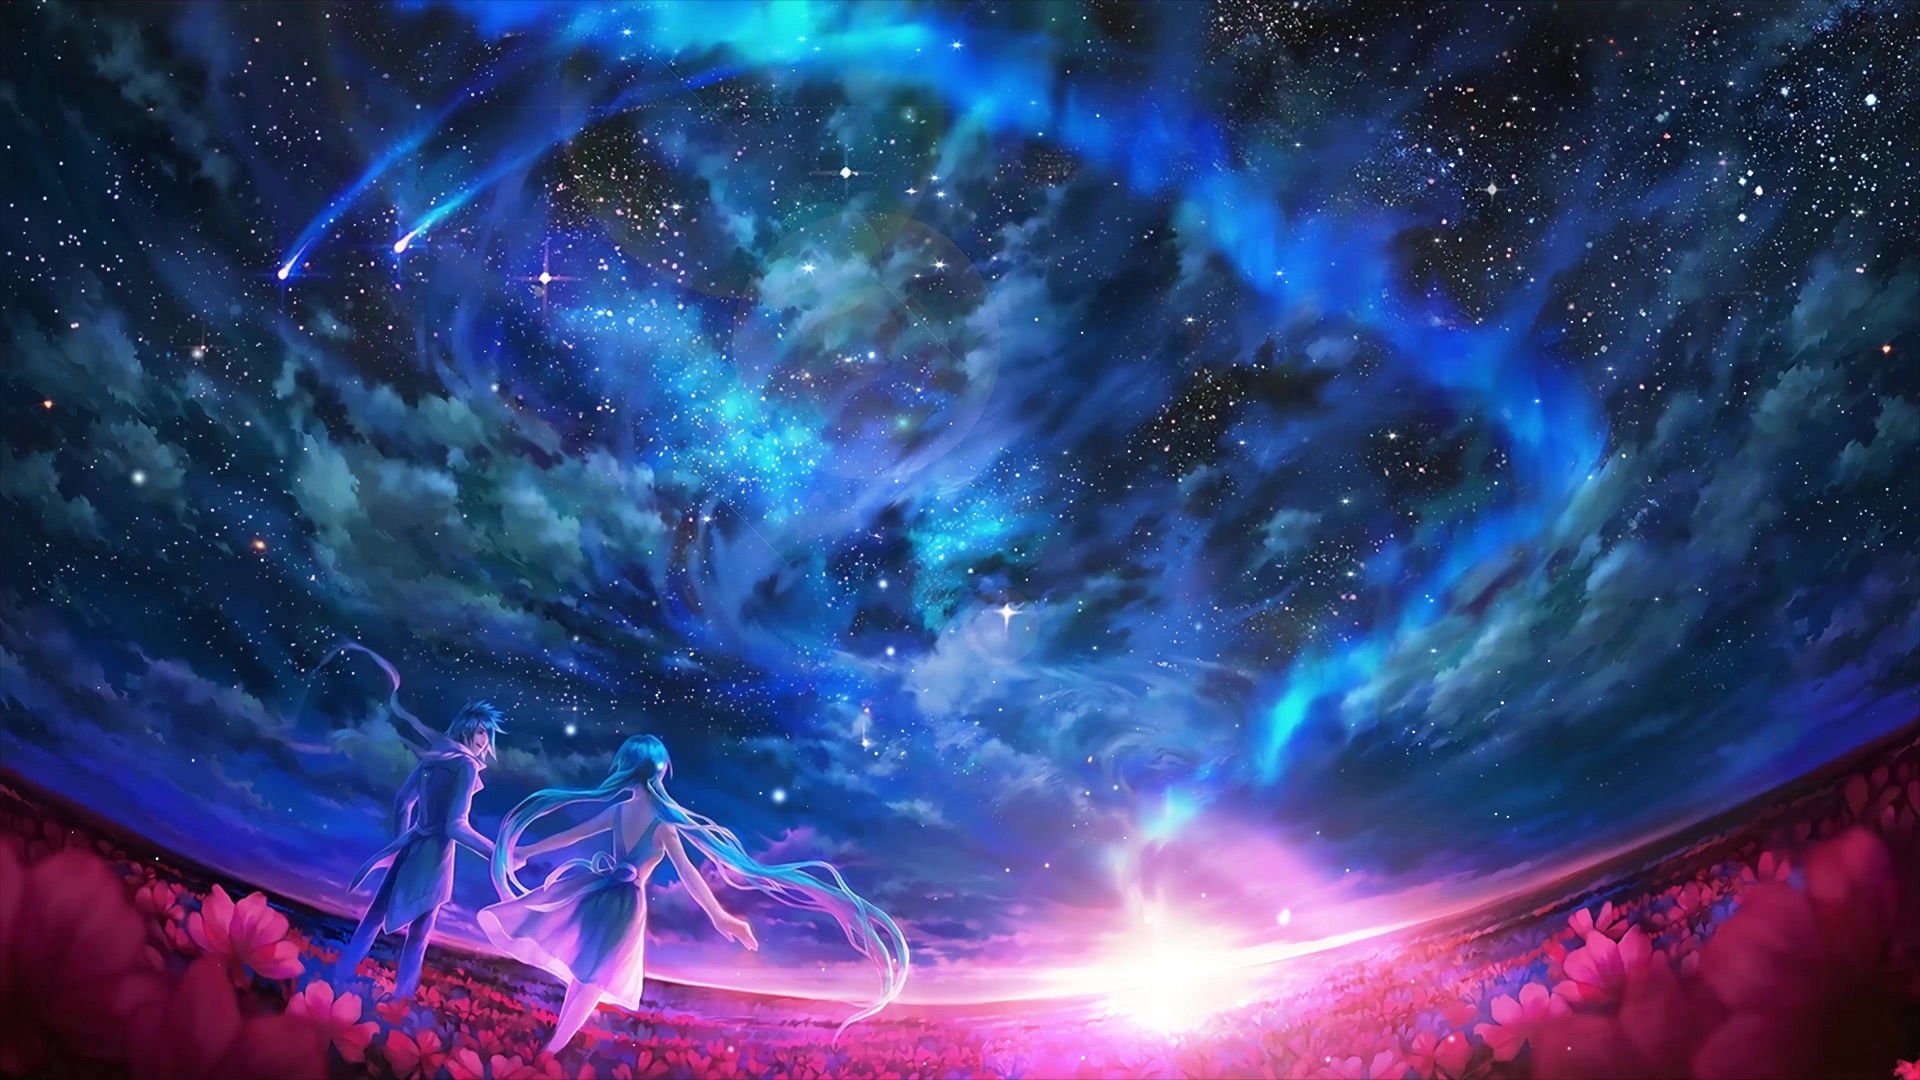 Anime Couple In Flower Field Under Starry Aurora Sky Live Wallpaper ...